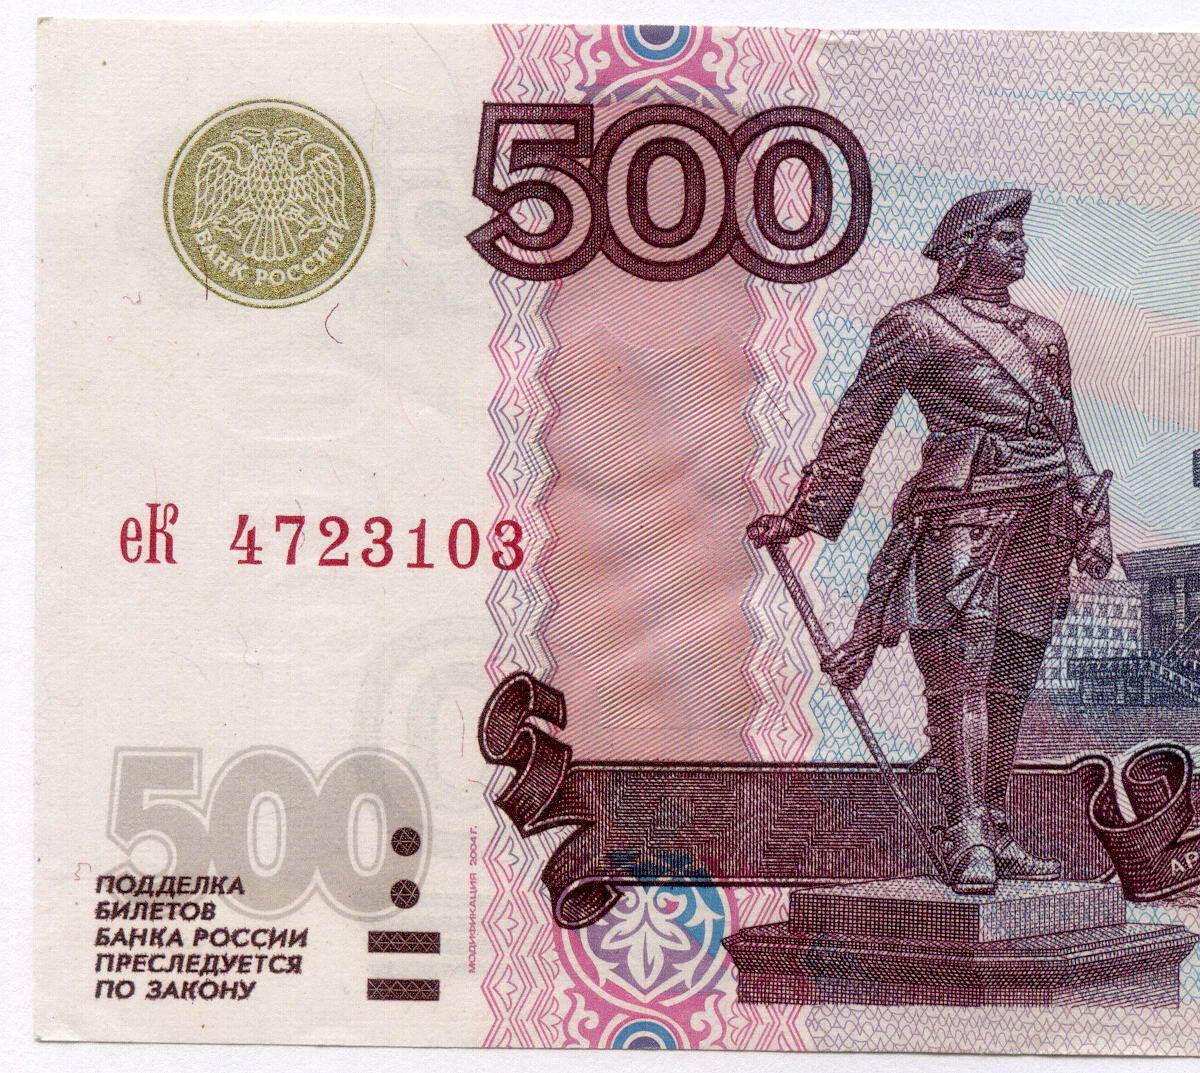 Про 500 рублей. 500 Рублей. Купюра 500 рублей. Банкнота 500 рублей. Деньги 500 рублей.